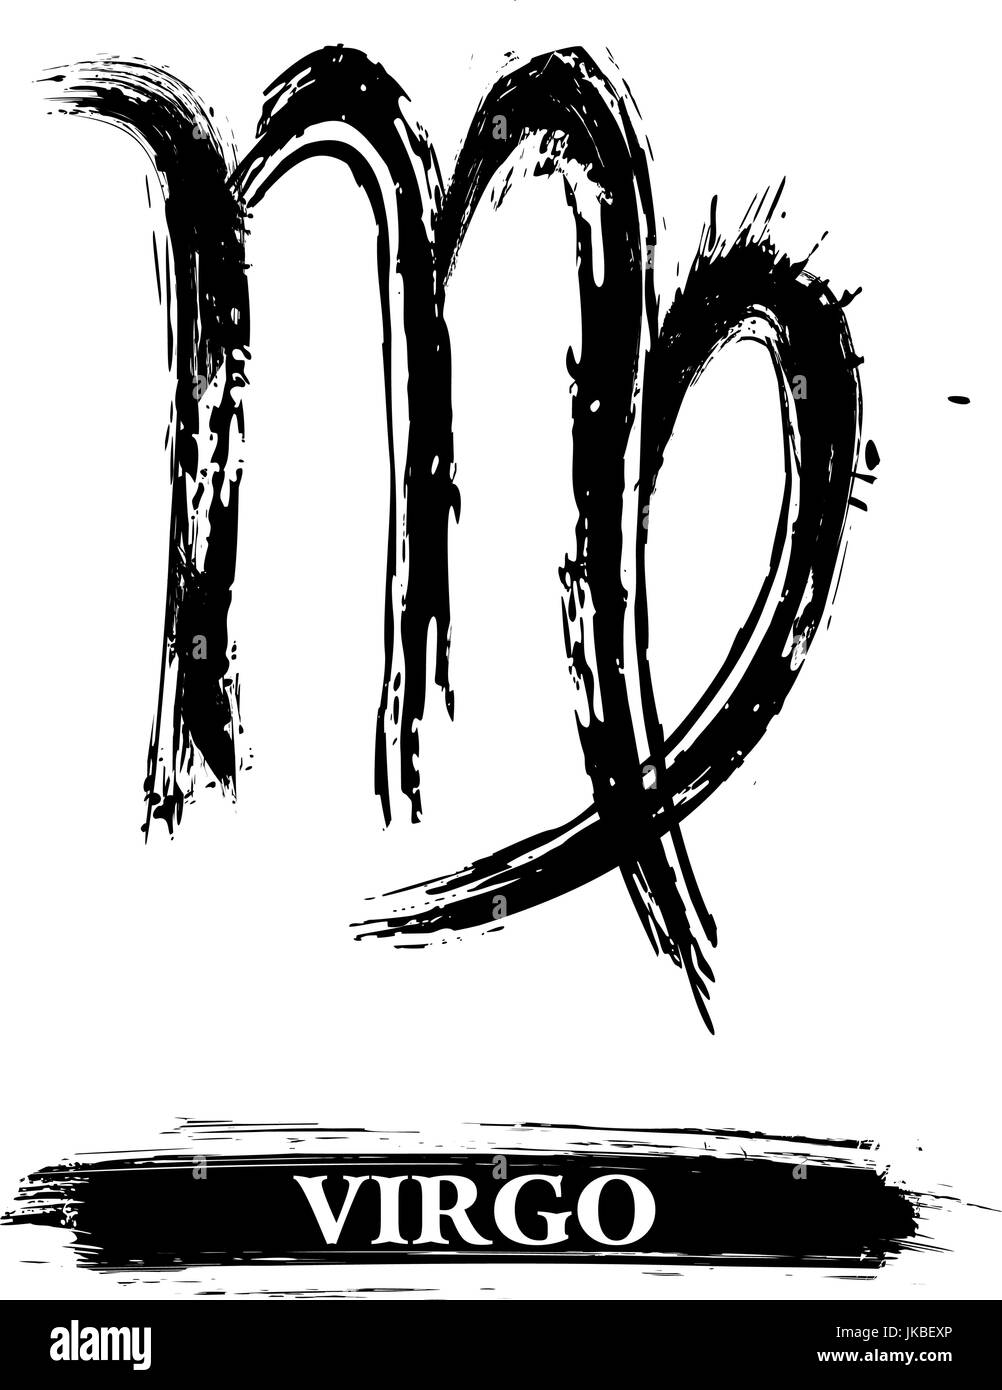 Virgo symbol Stock Vector